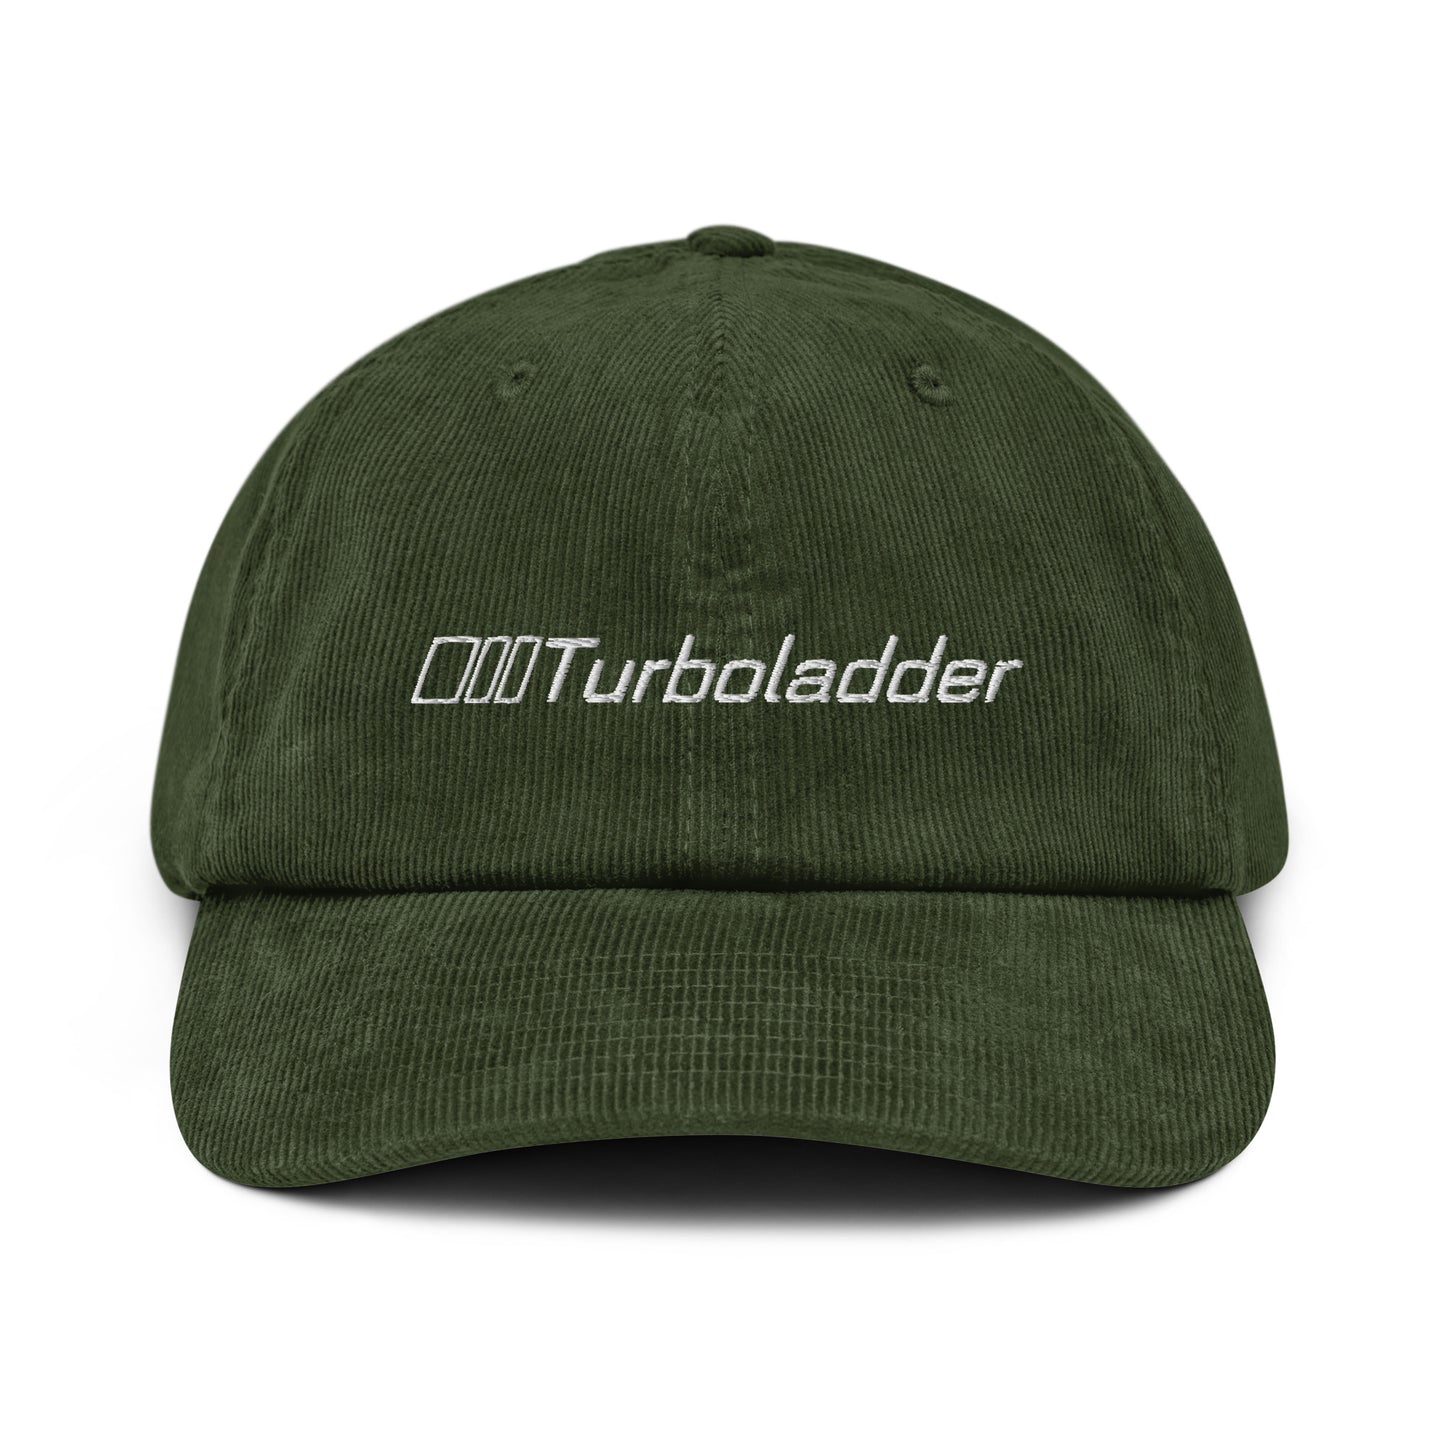 Vintage Turboladder Corduroy hat